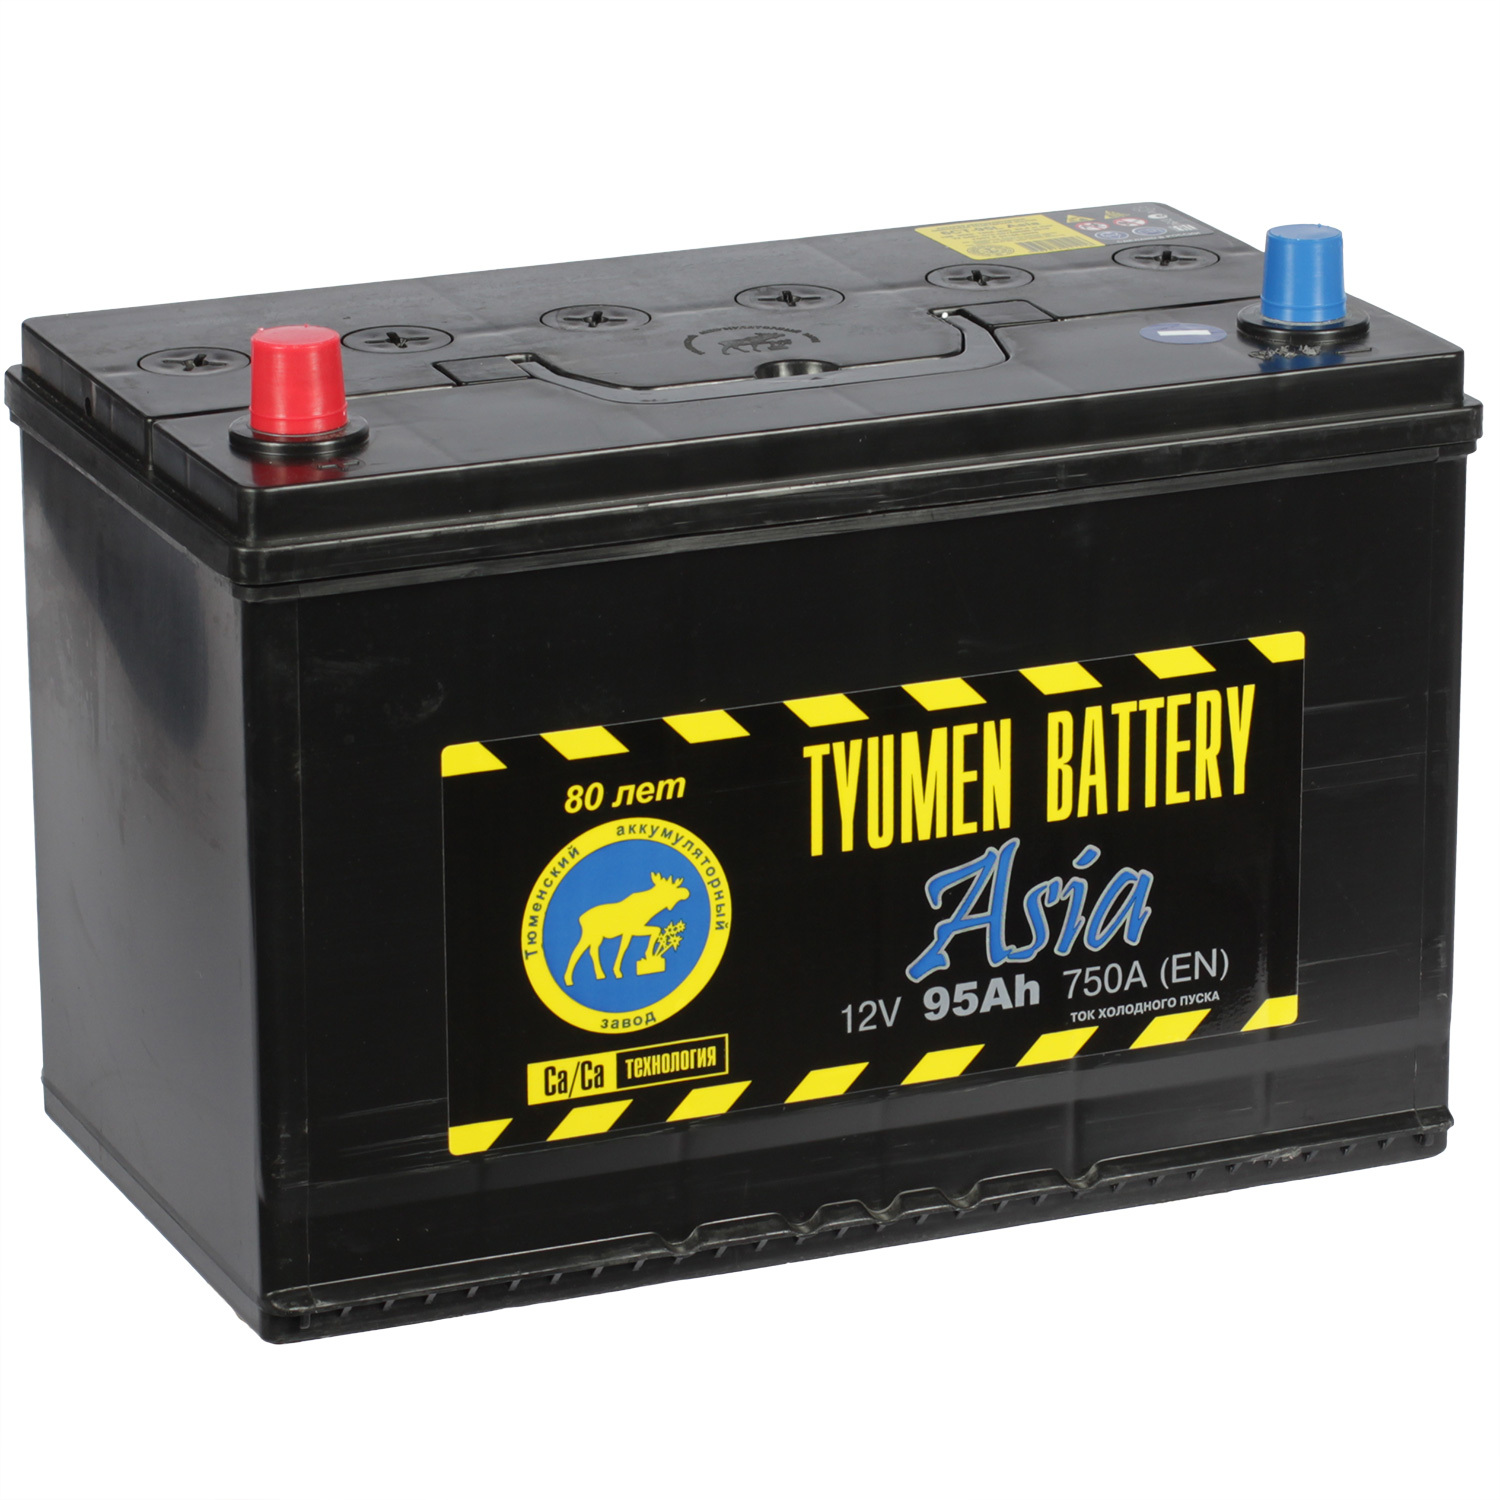 Tyumen Battery Автомобильный аккумулятор Tyumen Battery 95 Ач прямая полярность D31R tyumen battery автомобильный аккумулятор tyumen battery 95 ач прямая полярность d31r